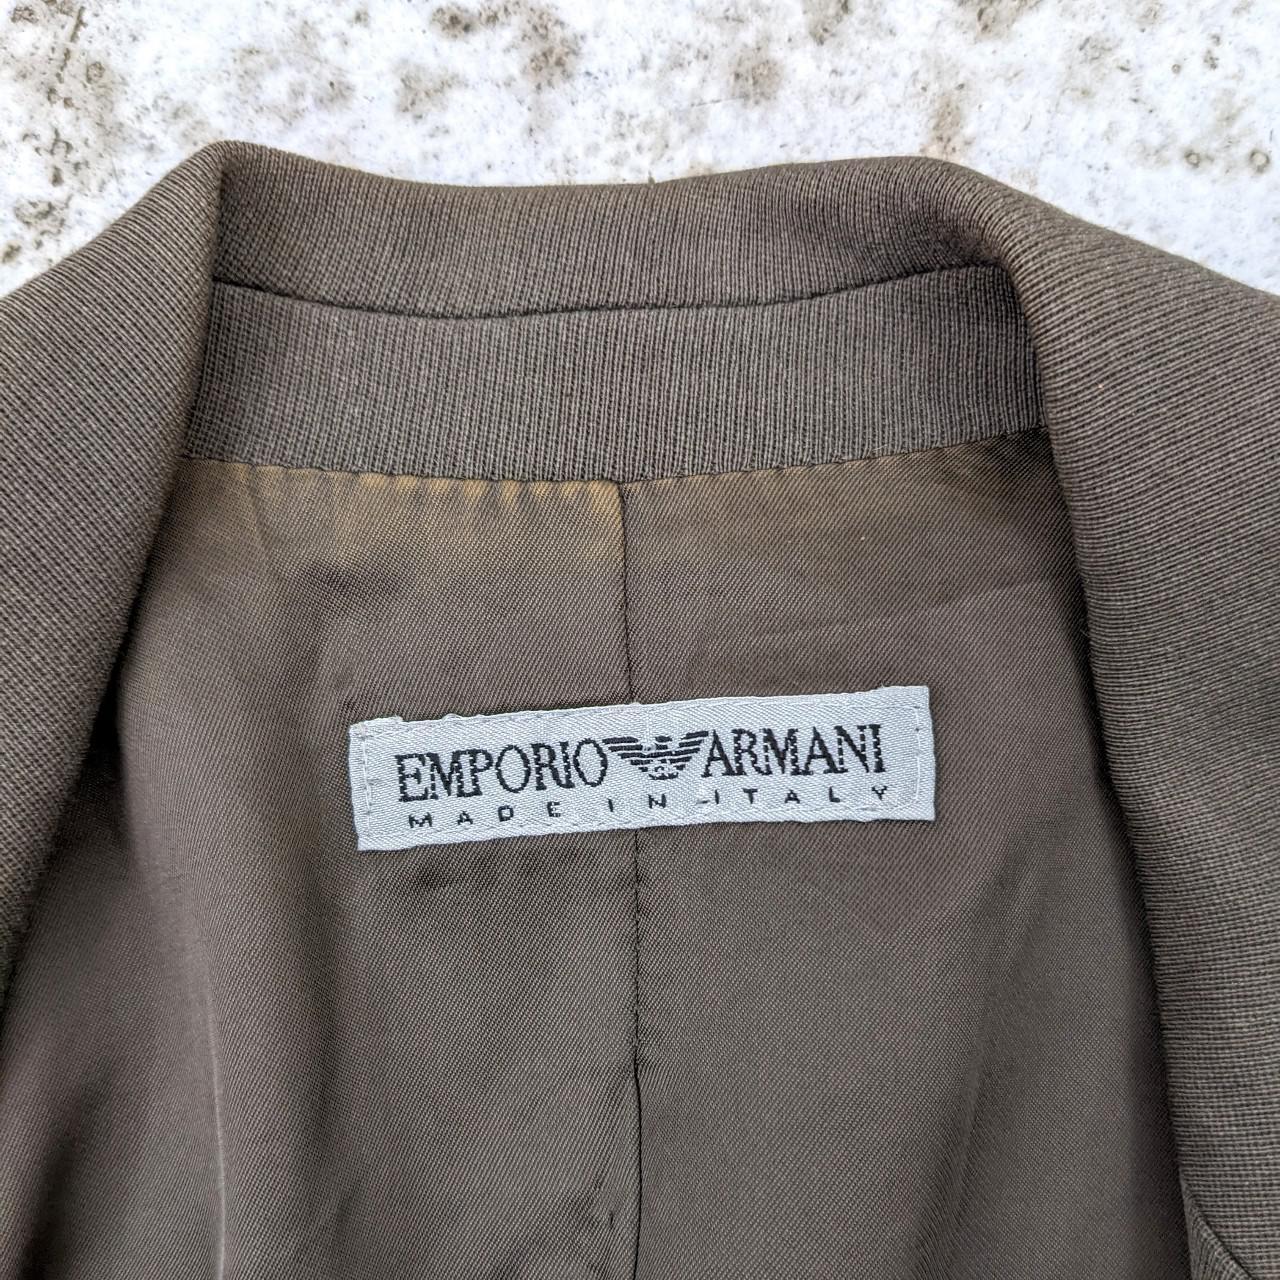 Product Image 4 - vintage 90's Emporio Armani blazer

brand: